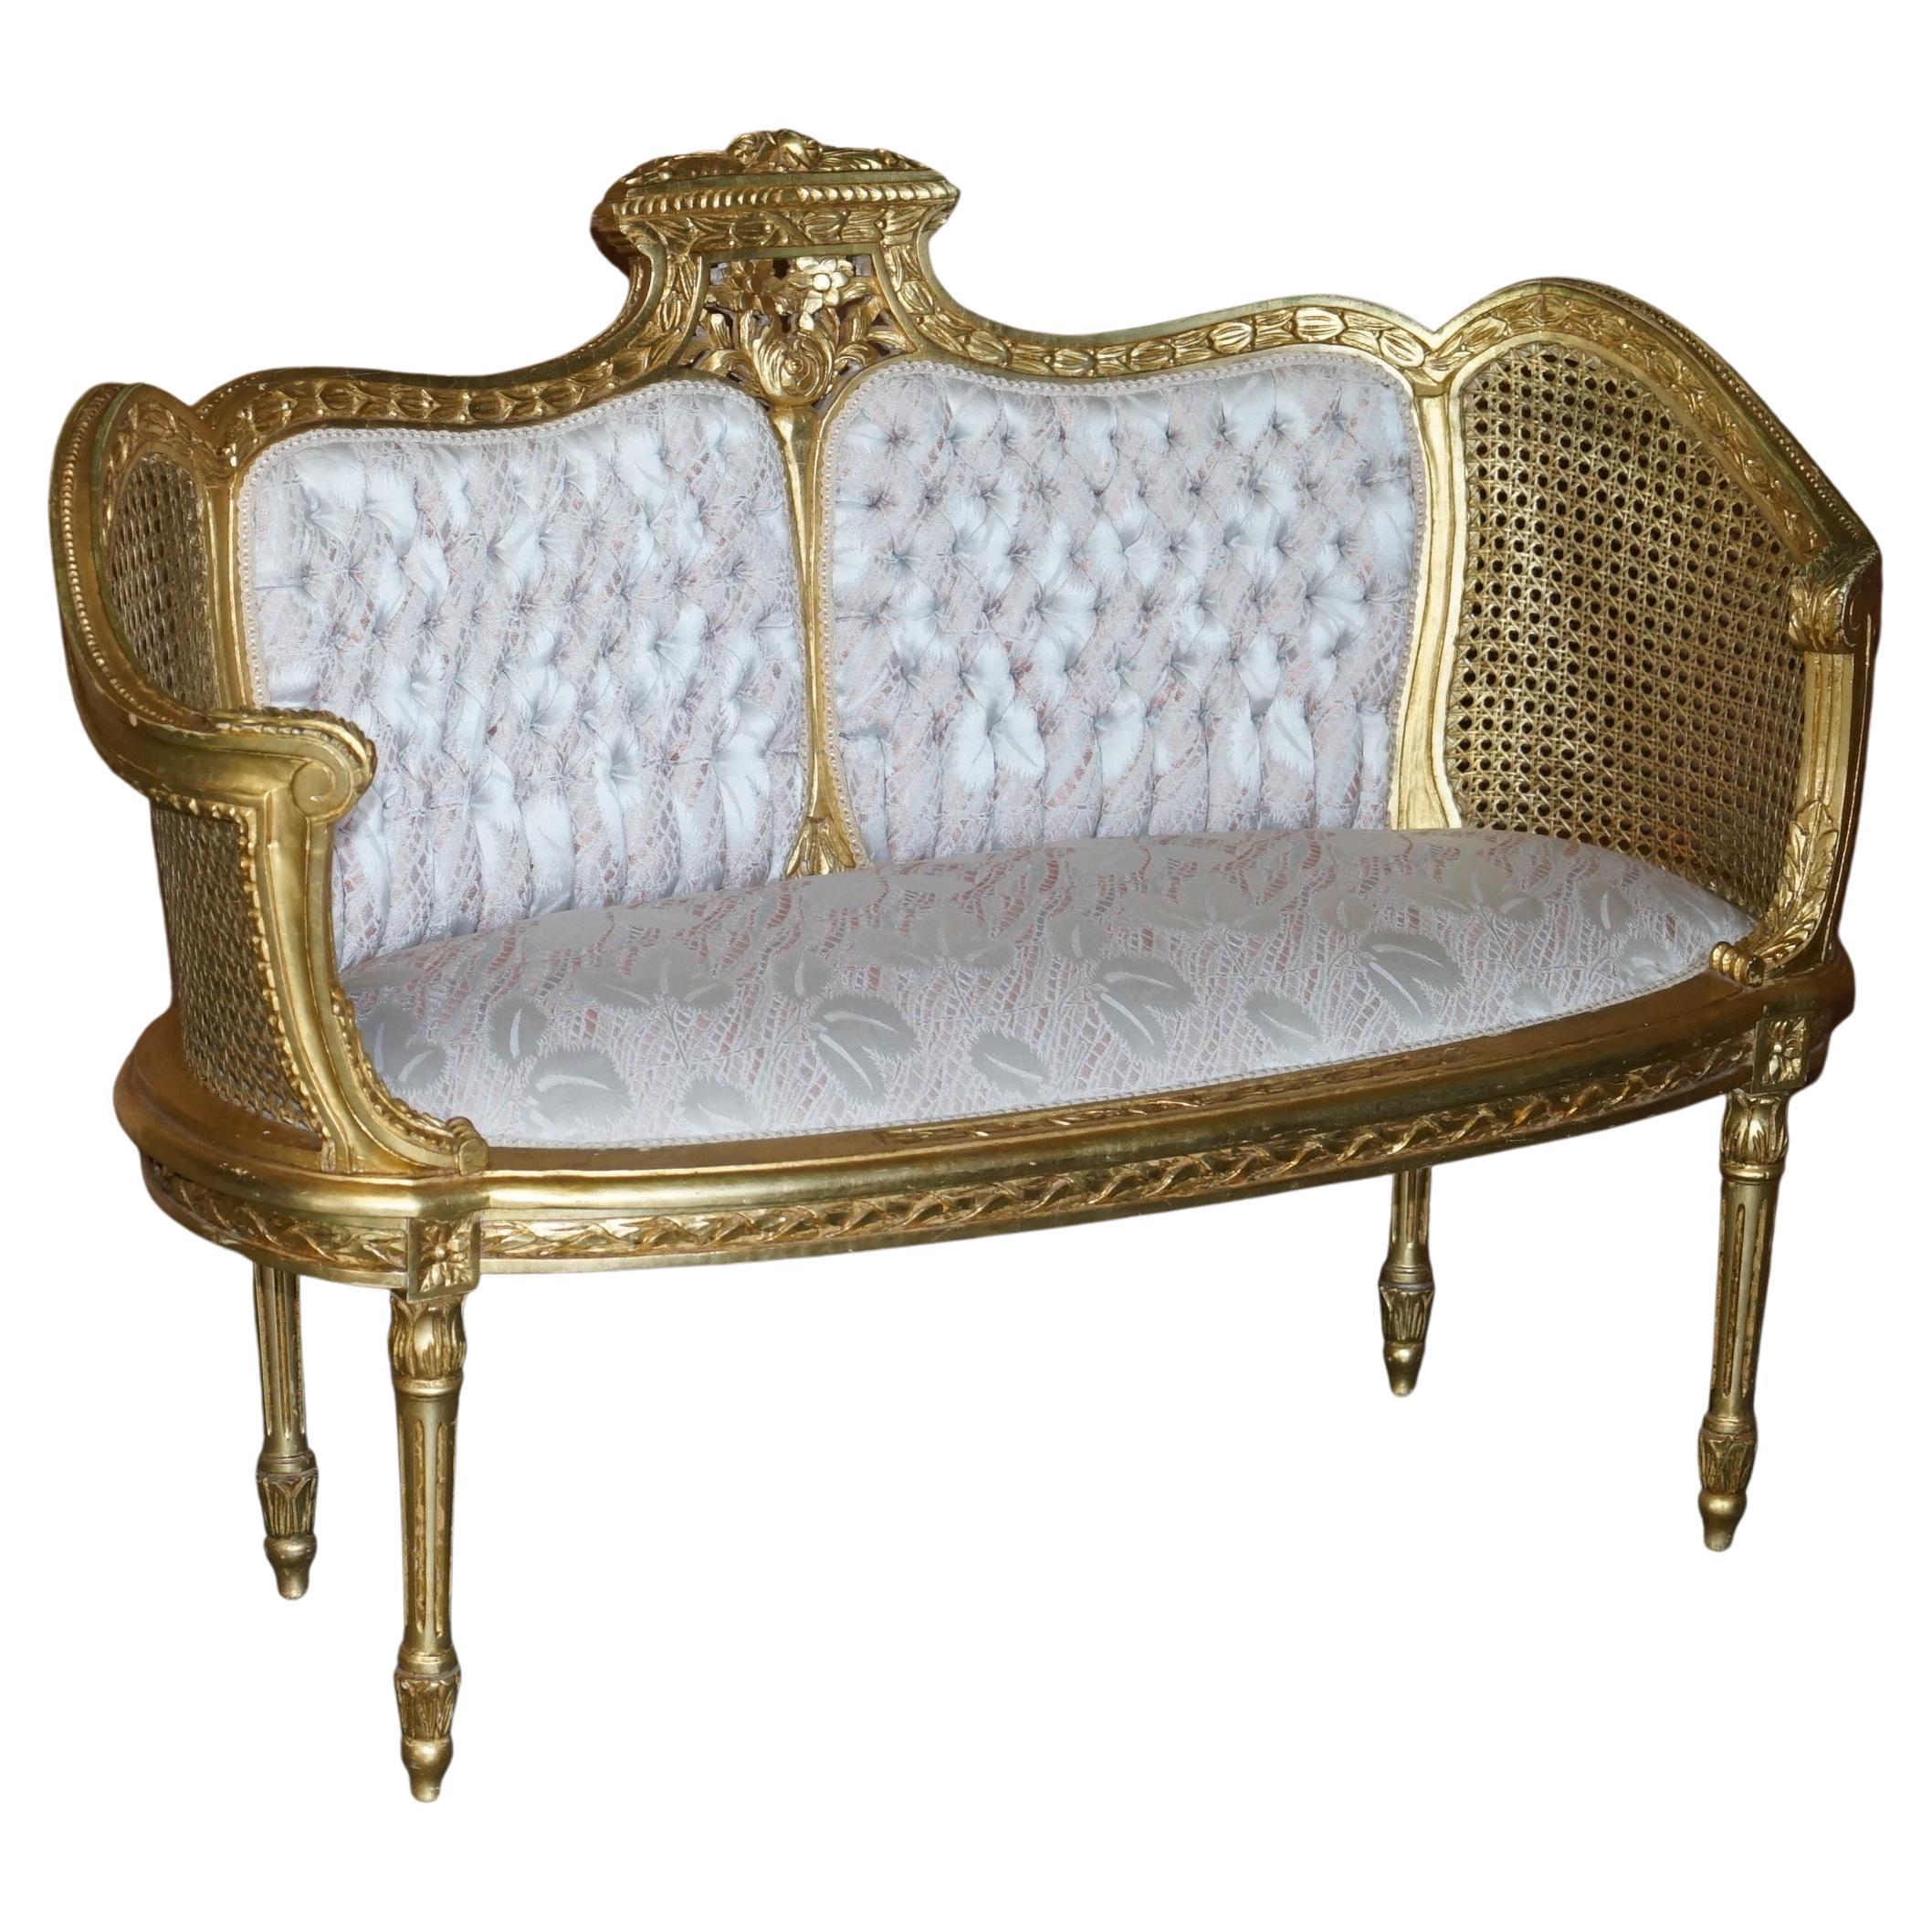 Fine Antique Napoleon III circa 1870 Gold Giltwood Bergere Louis XVI Sofa Settee For Sale